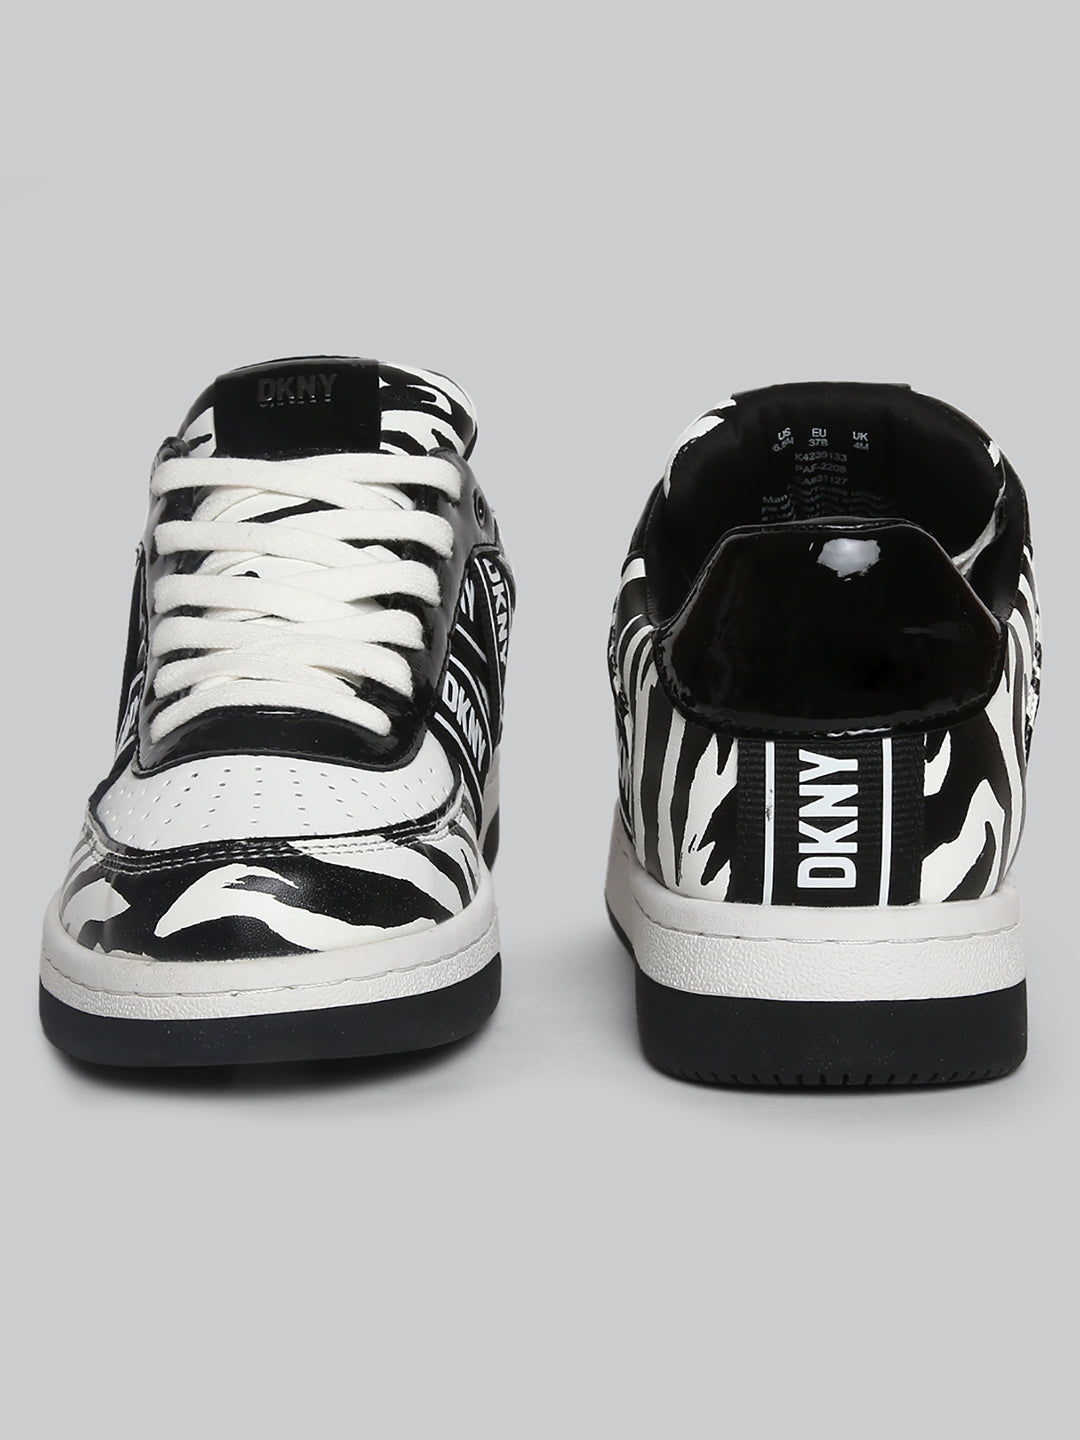 DKNY Women White & Black Sneakers